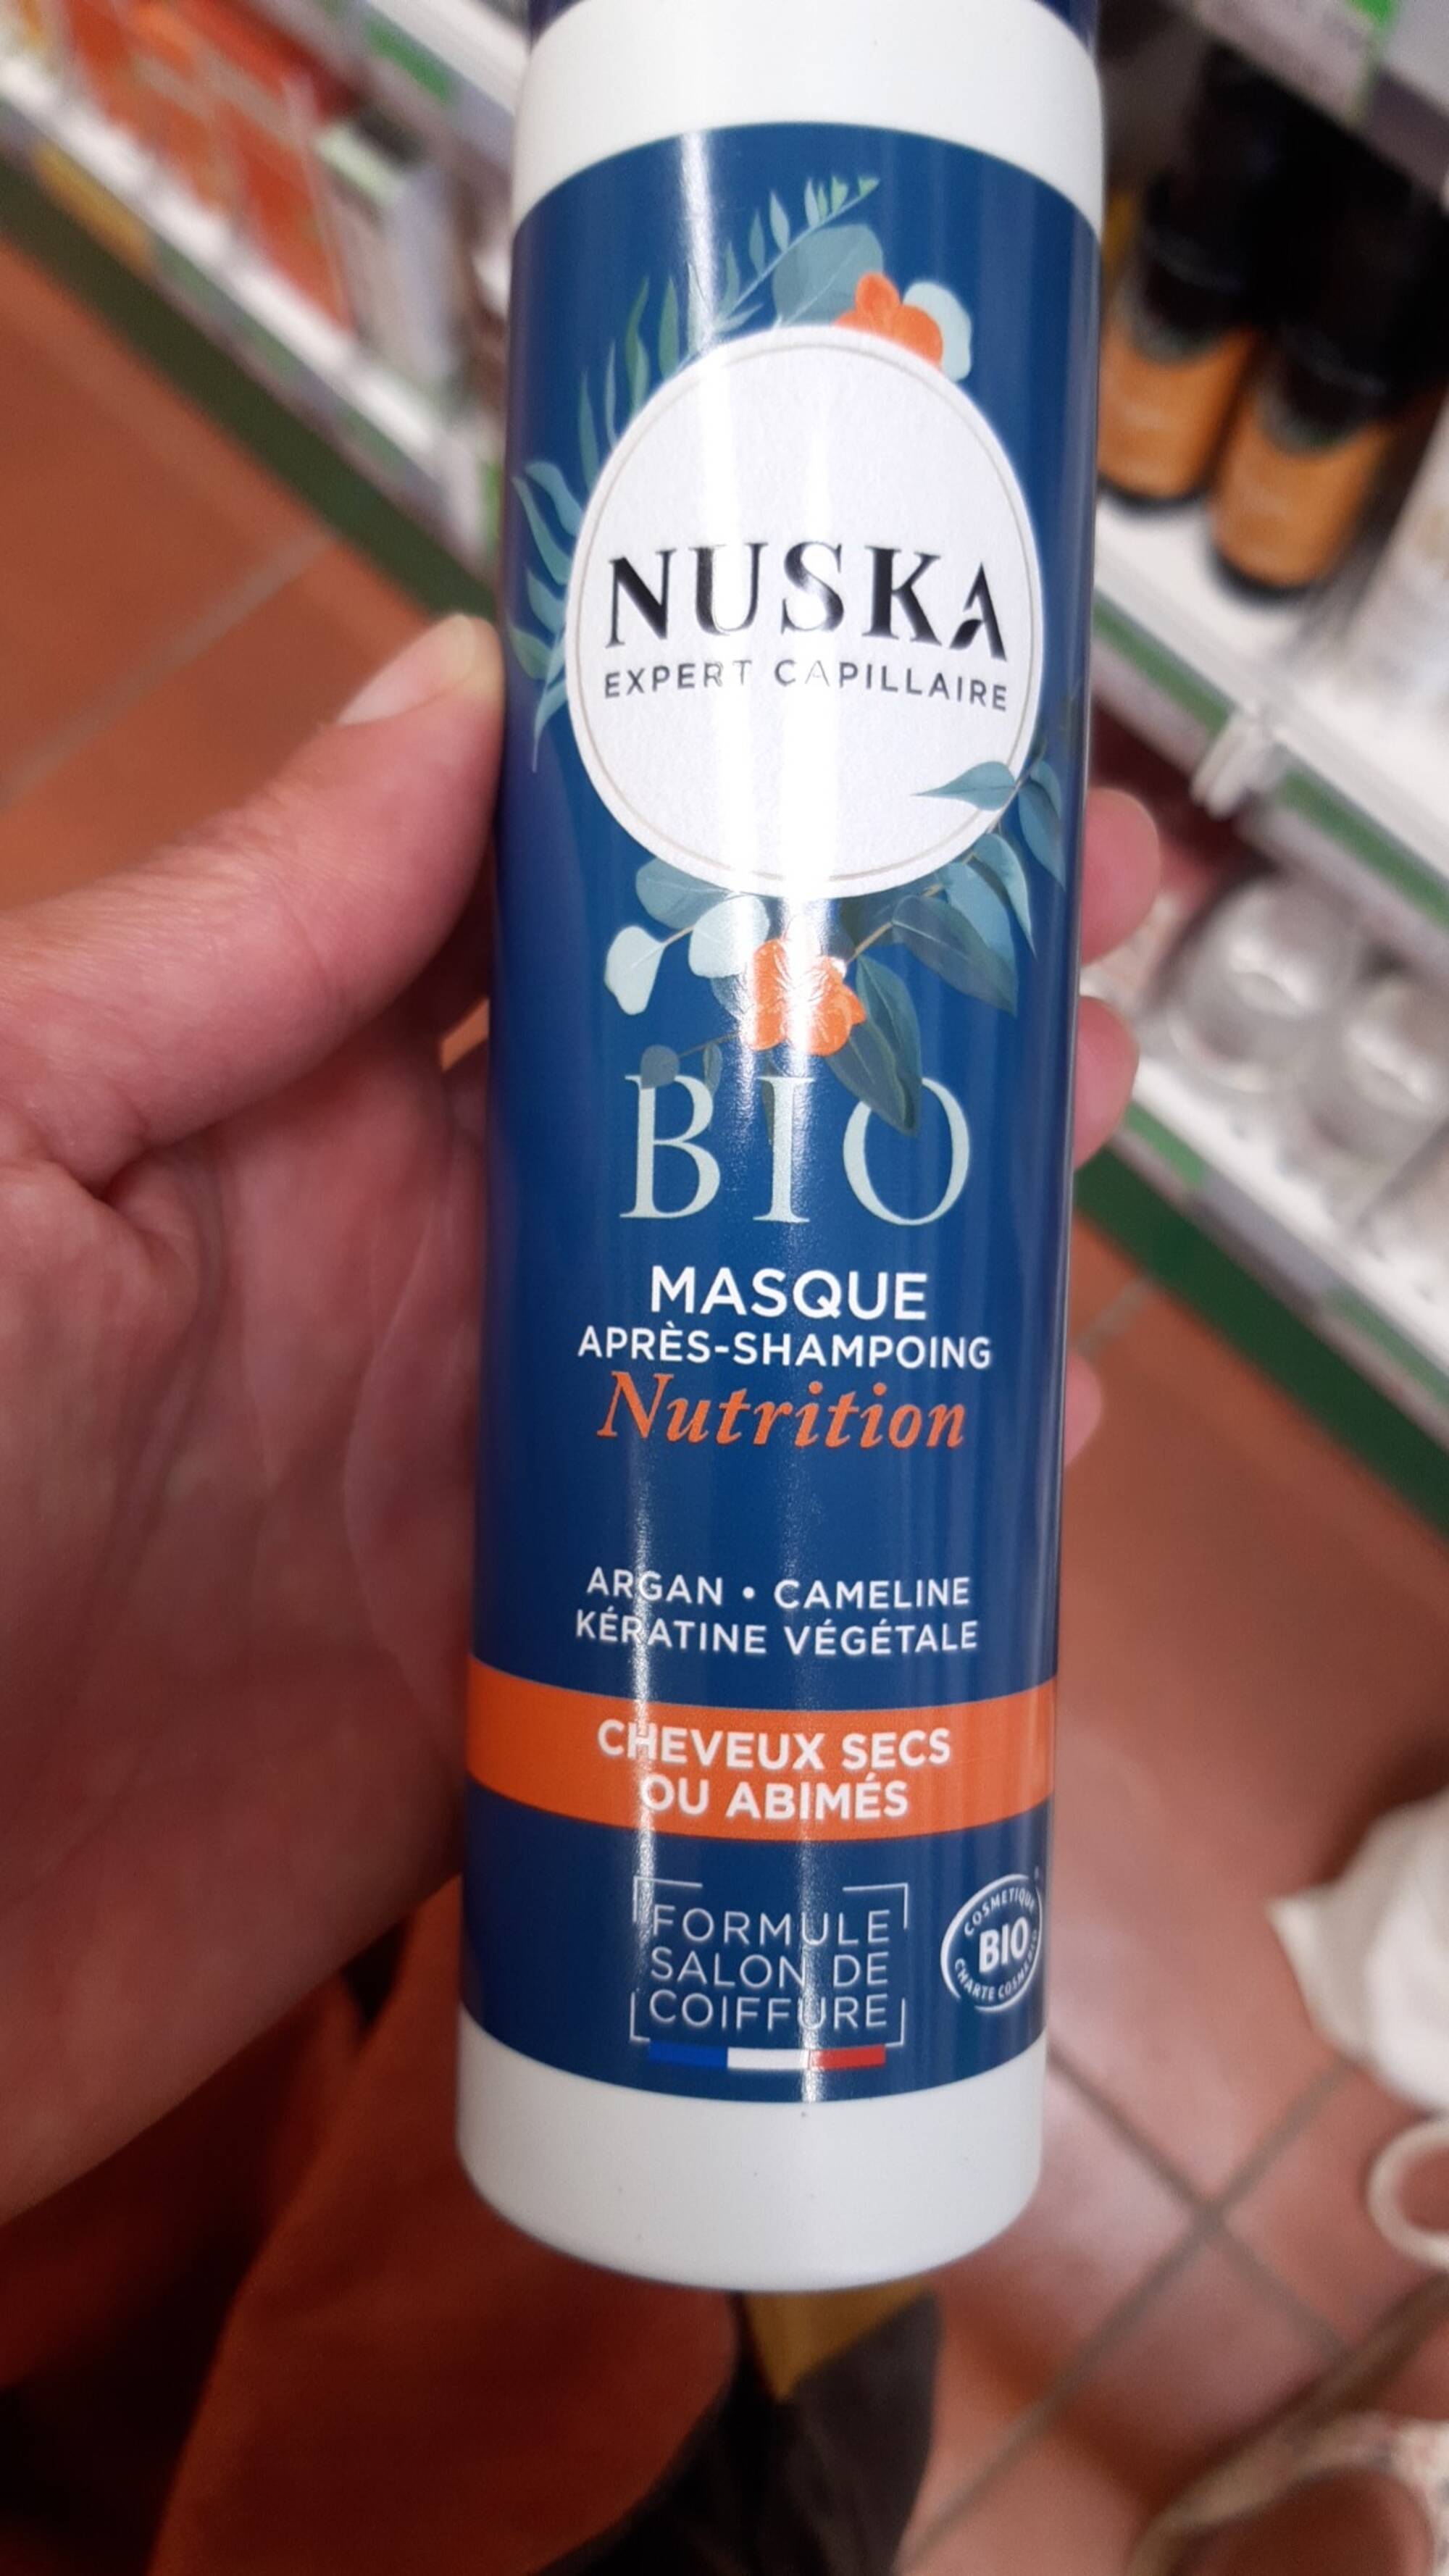 NUSKA - Masque après-shampooing nutrition